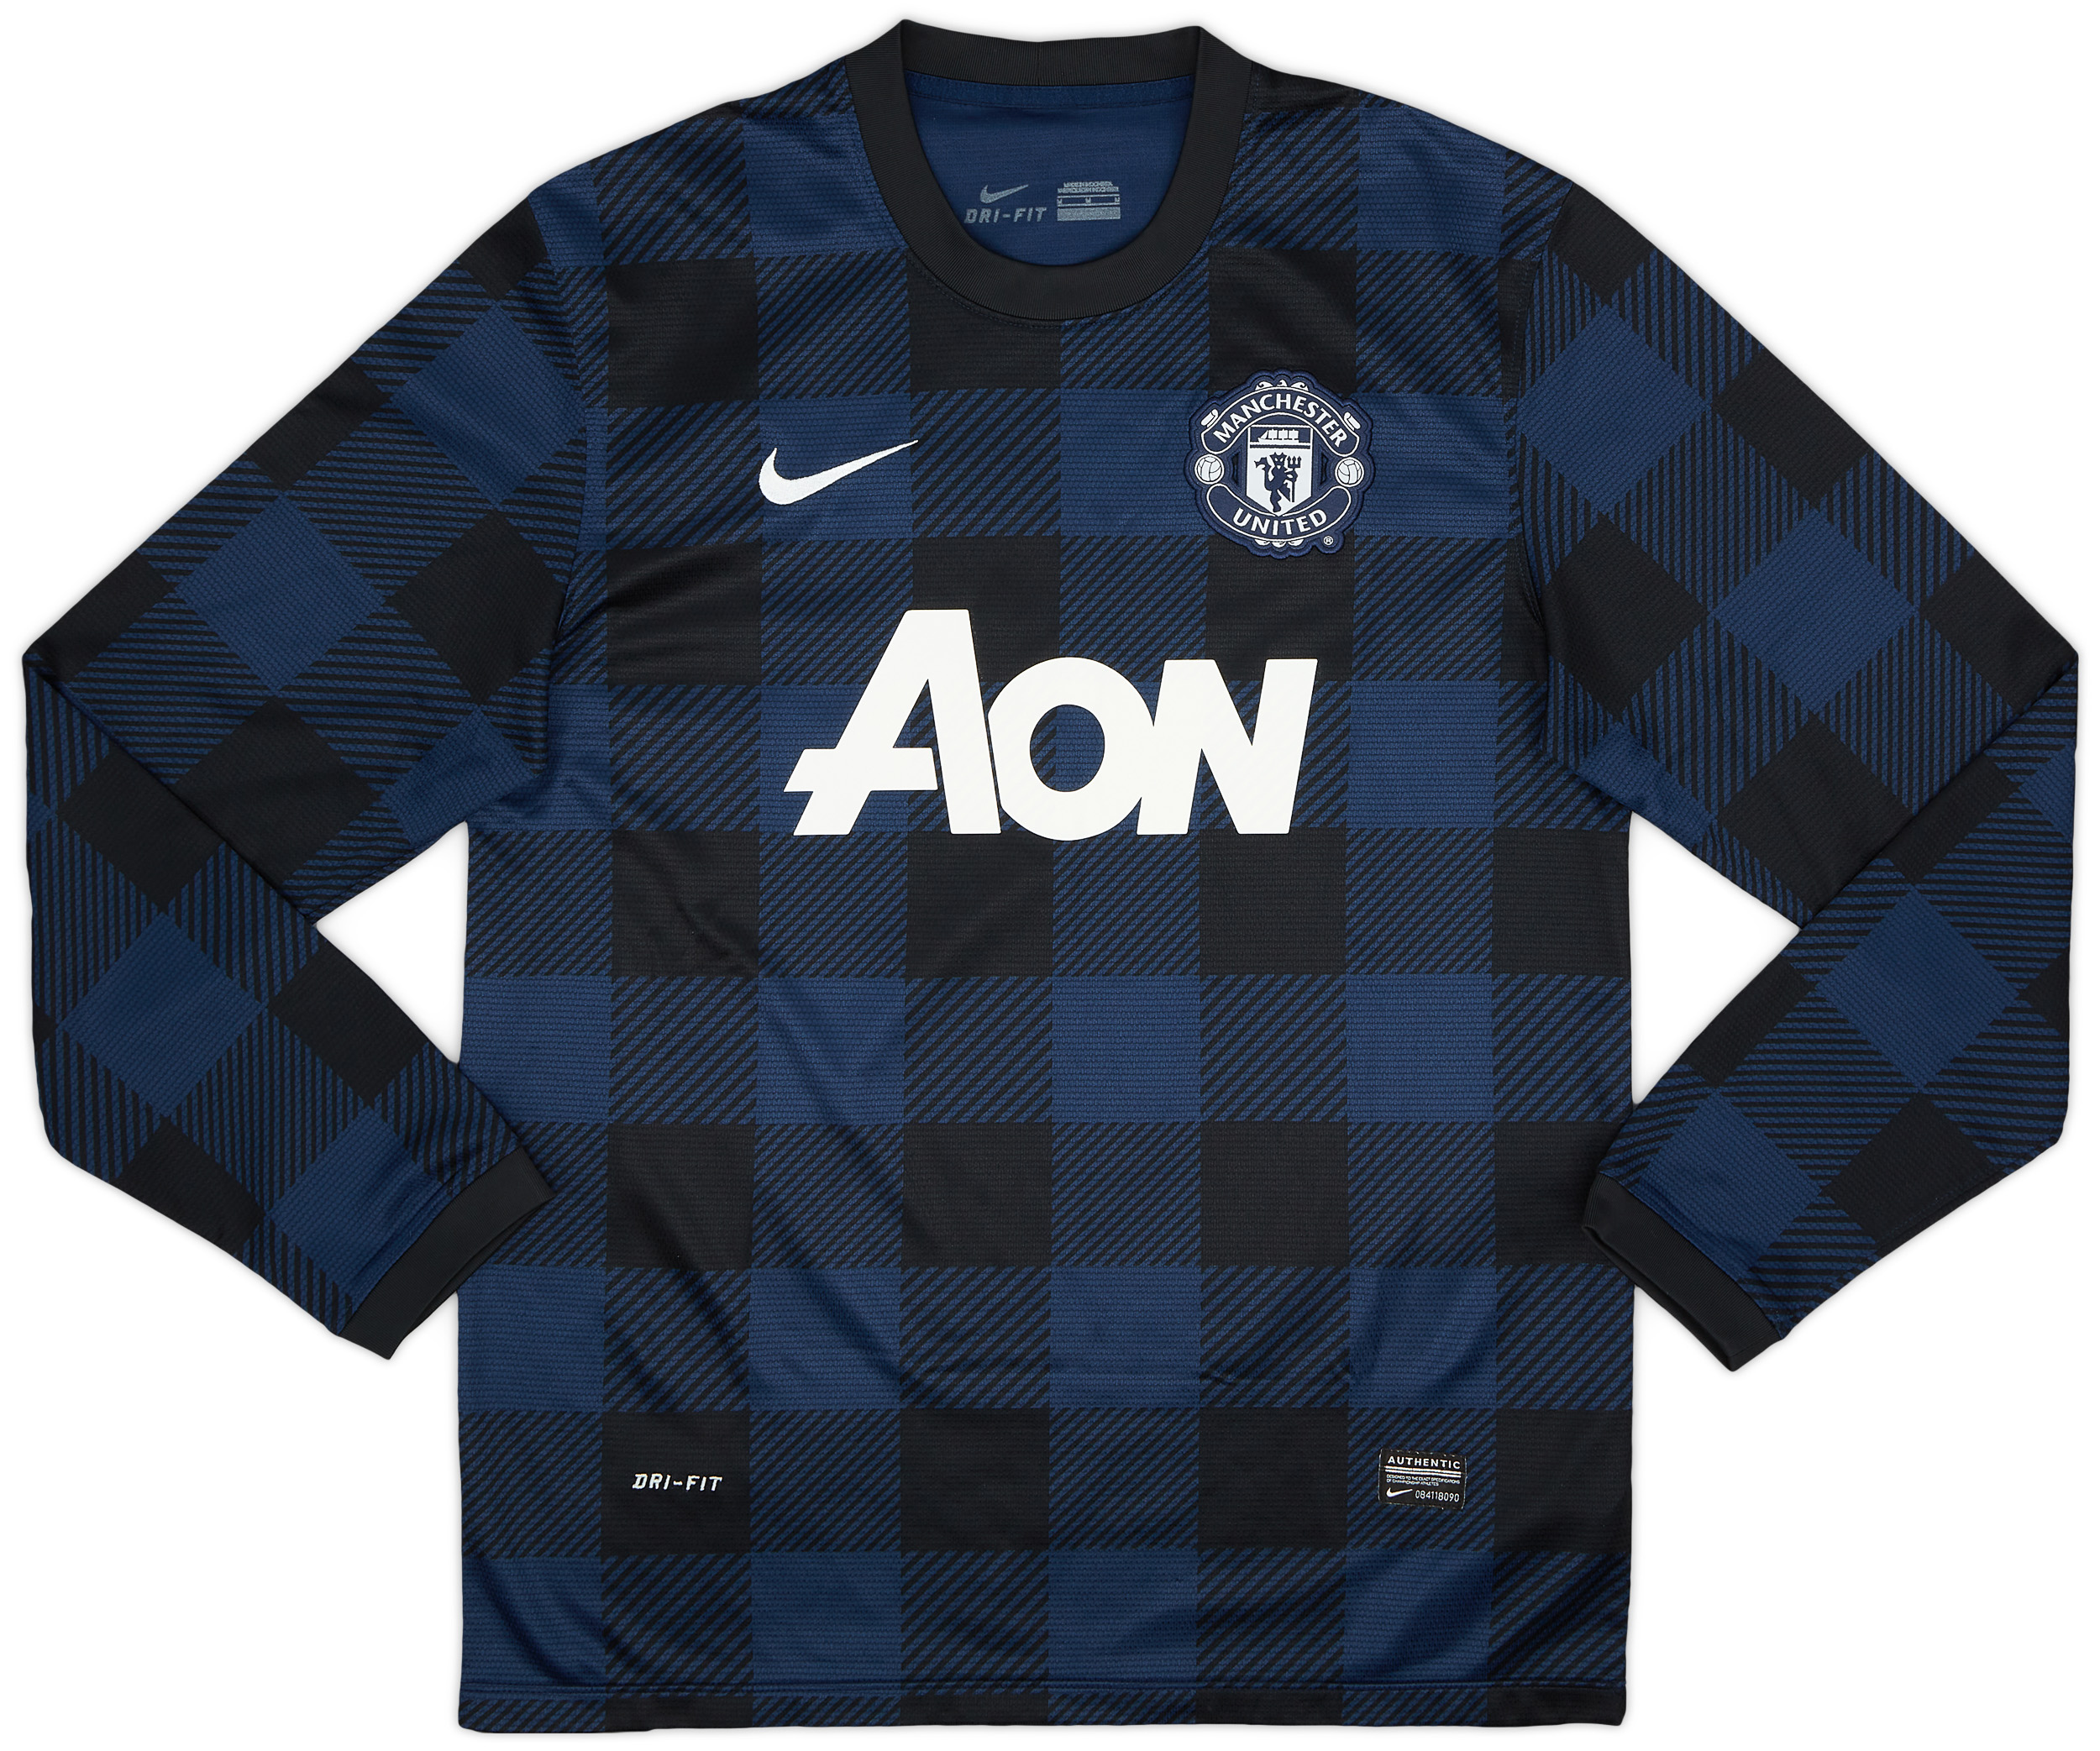 2013-14 Manchester United Away Shirt - 9/10 - ()